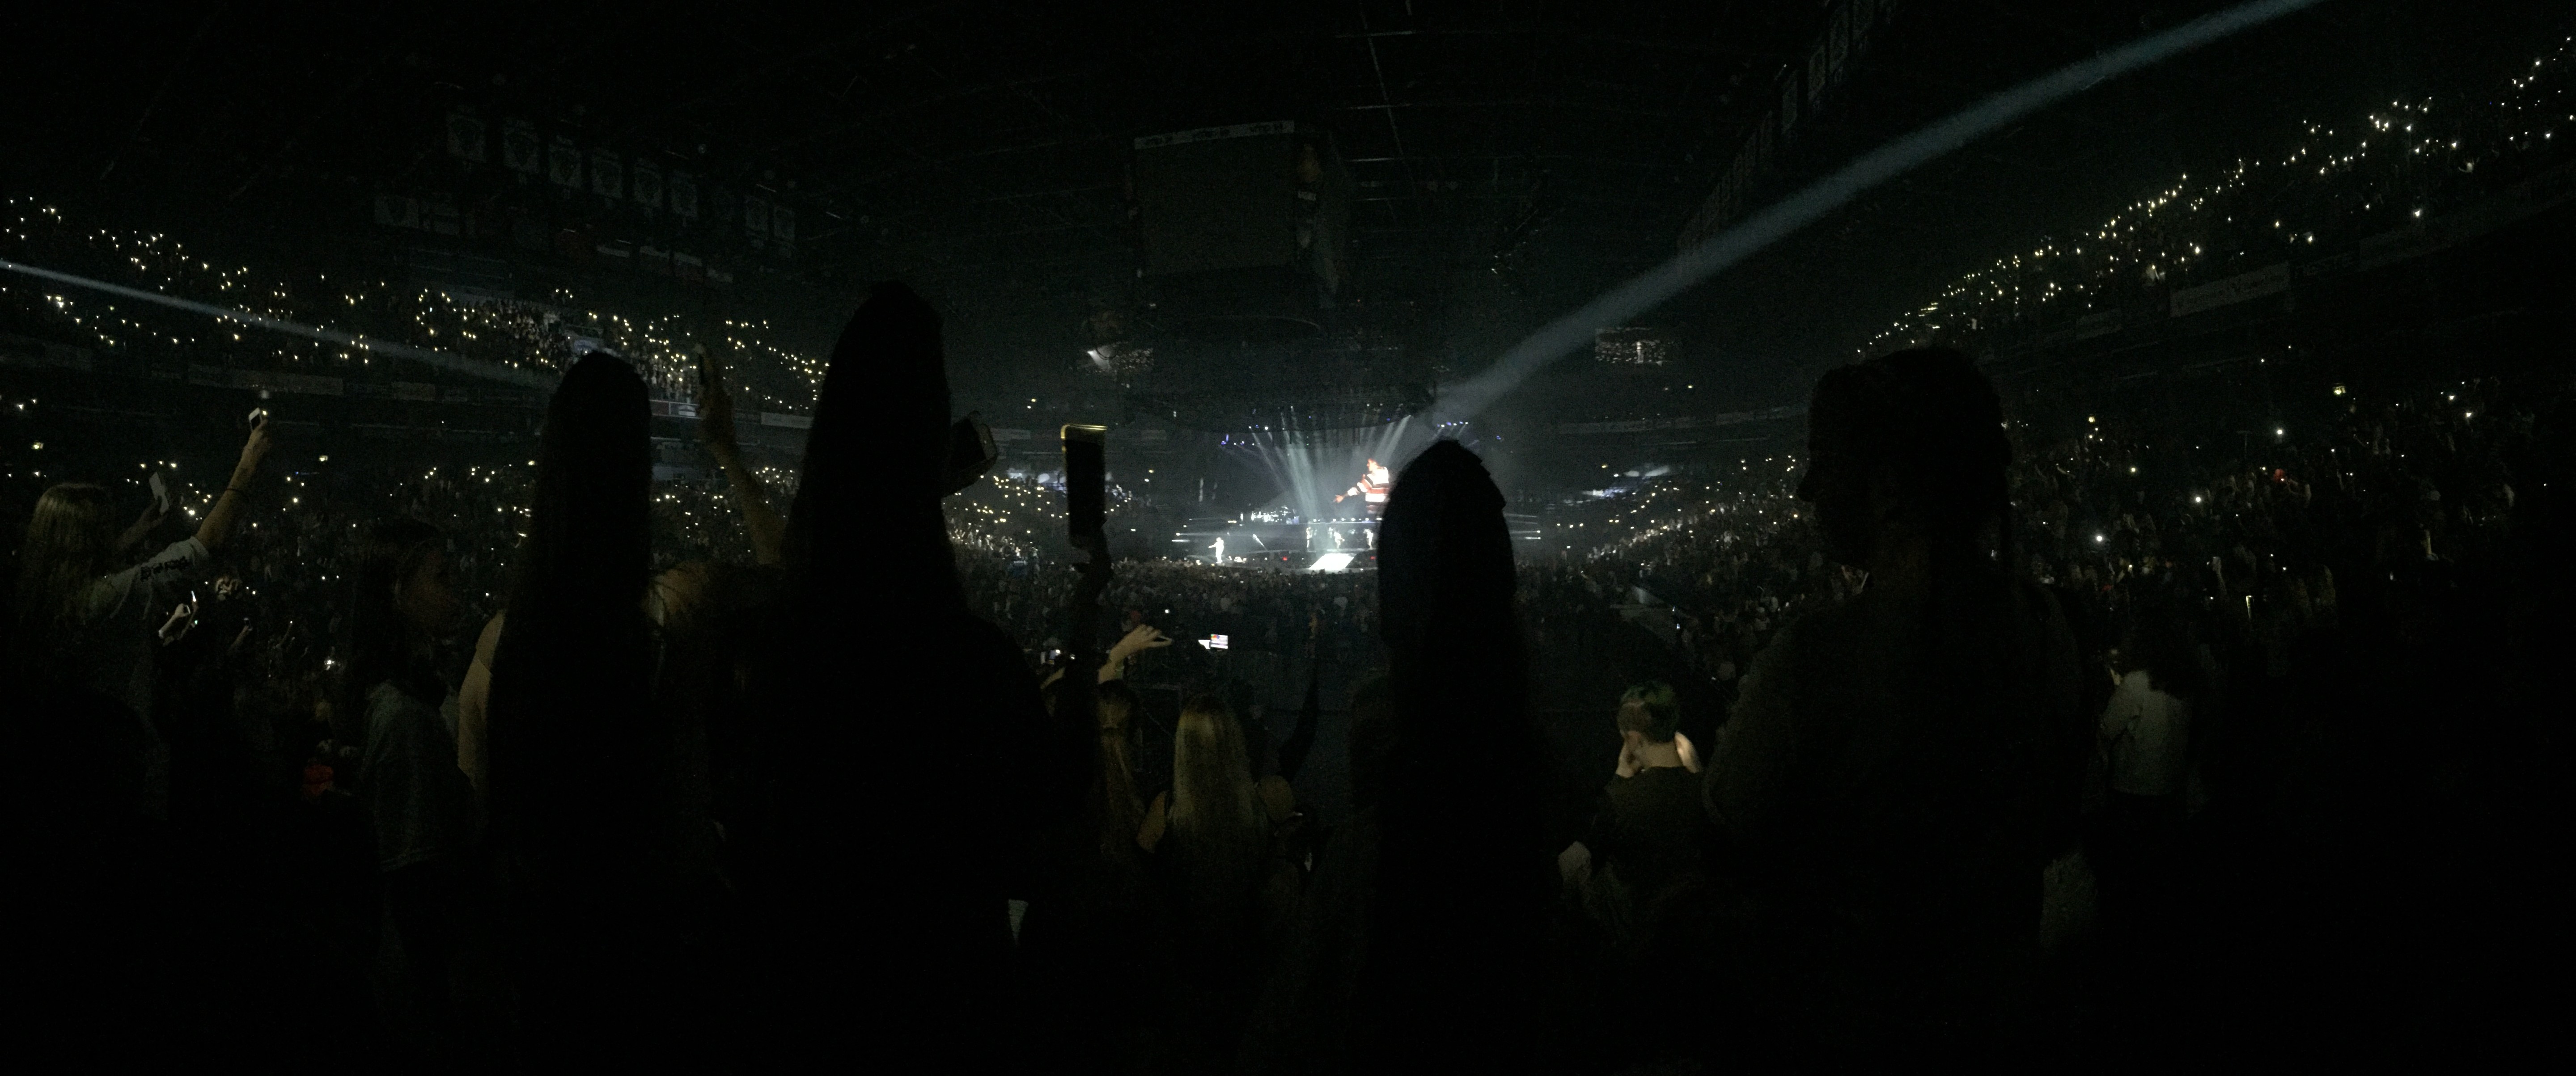 Justin Bieber Purpose World Tour in Helsinki 27.09